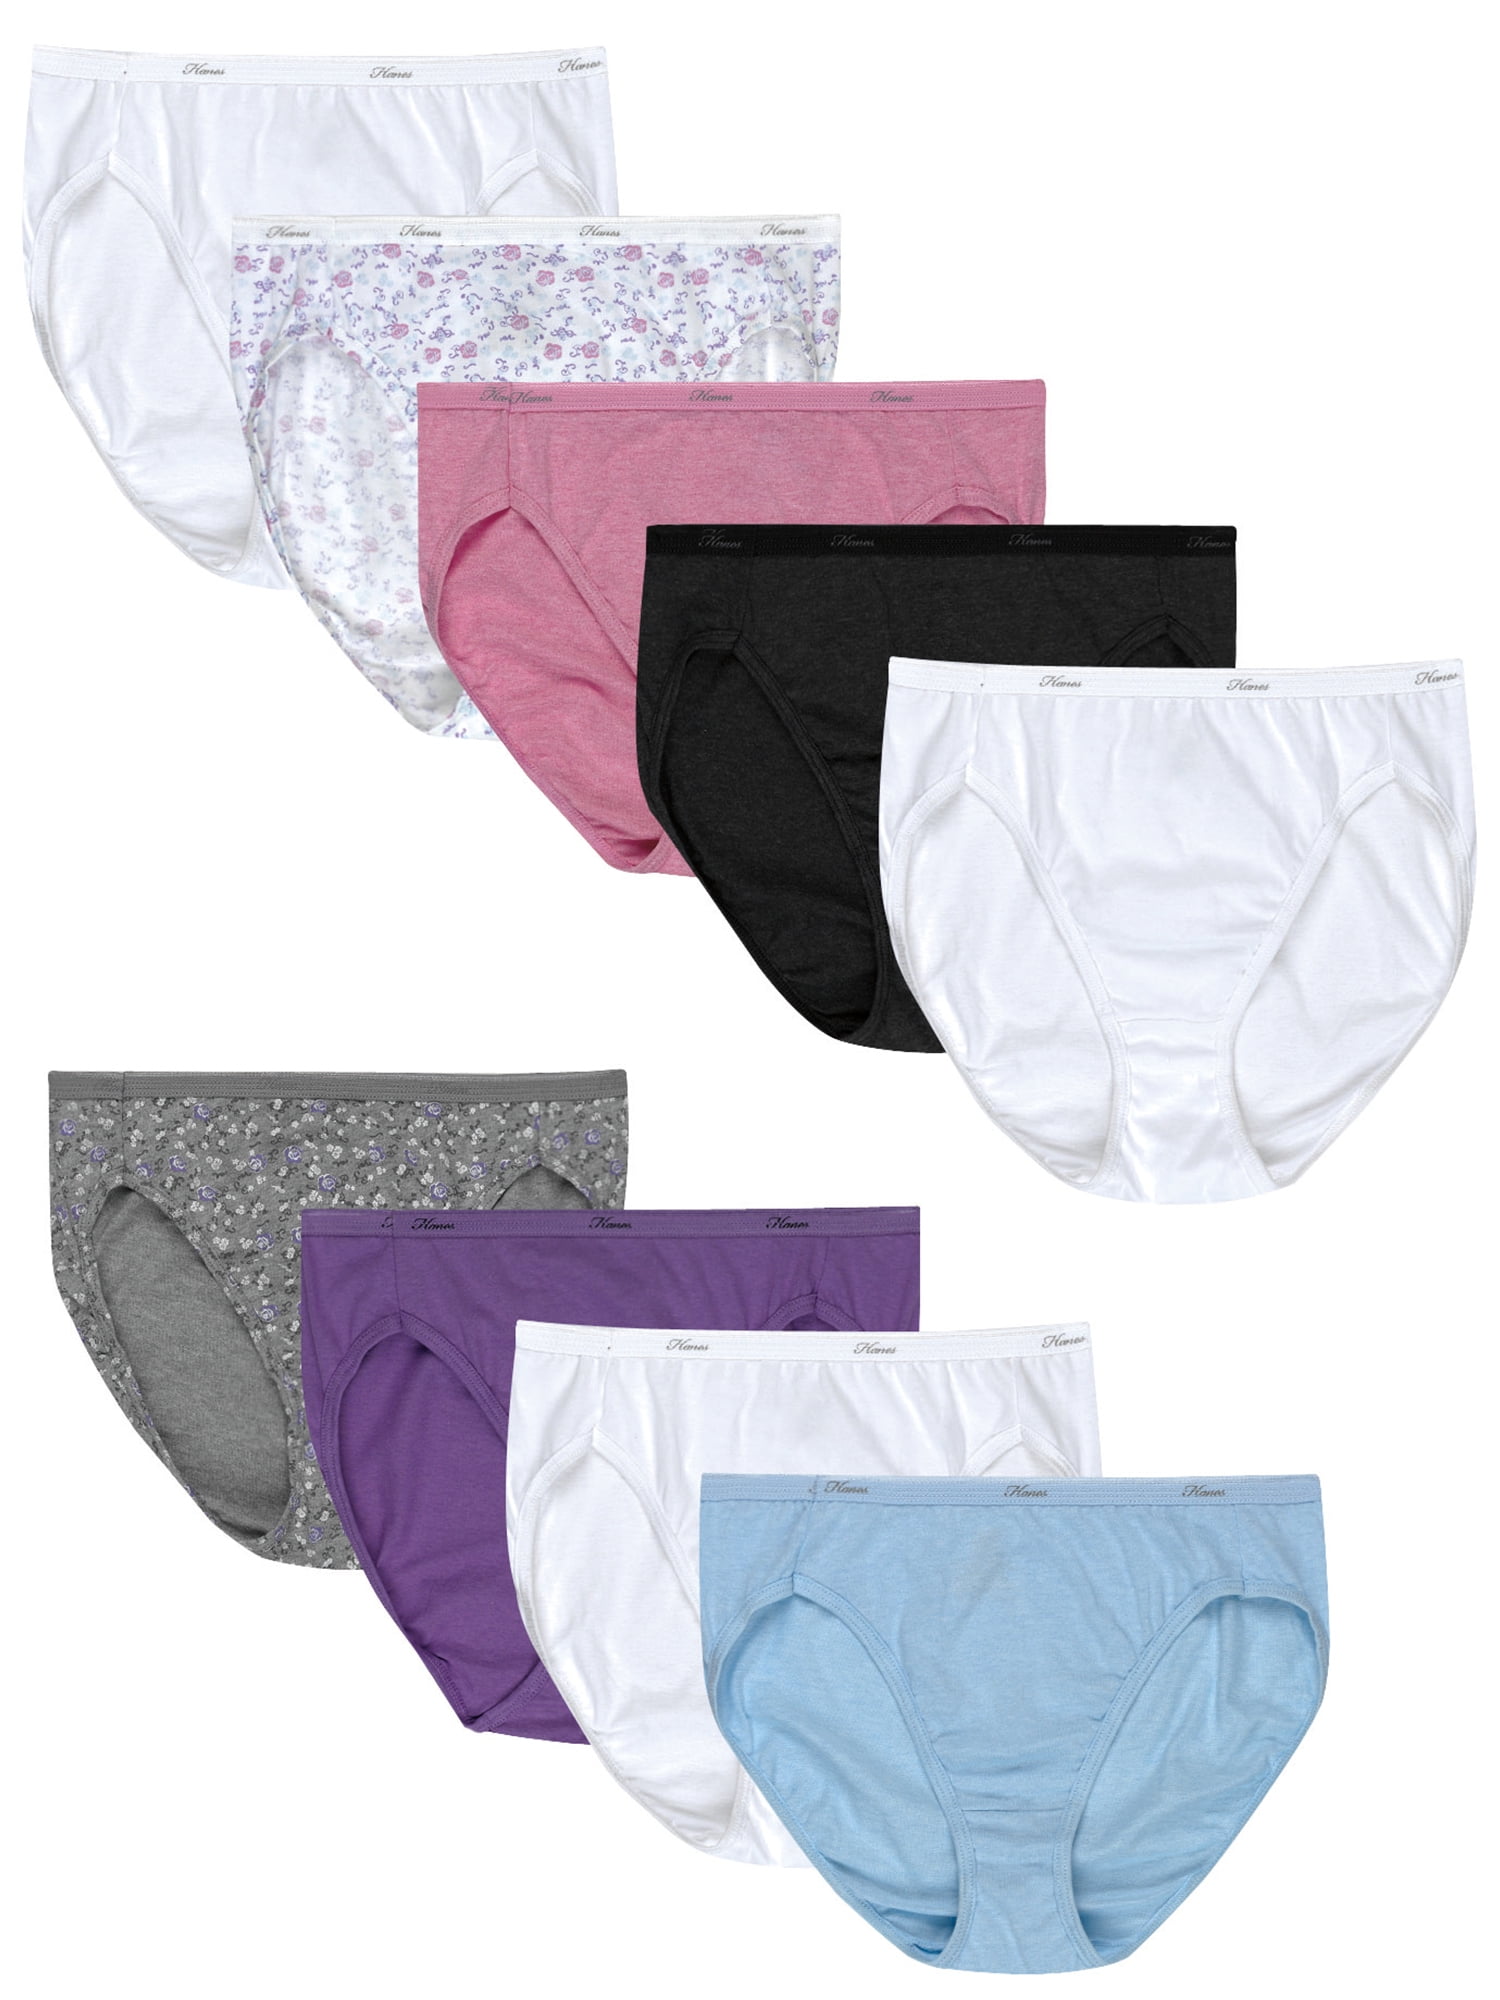 Hanes women's super value bonus cool comfort cotton hi-cut underwear